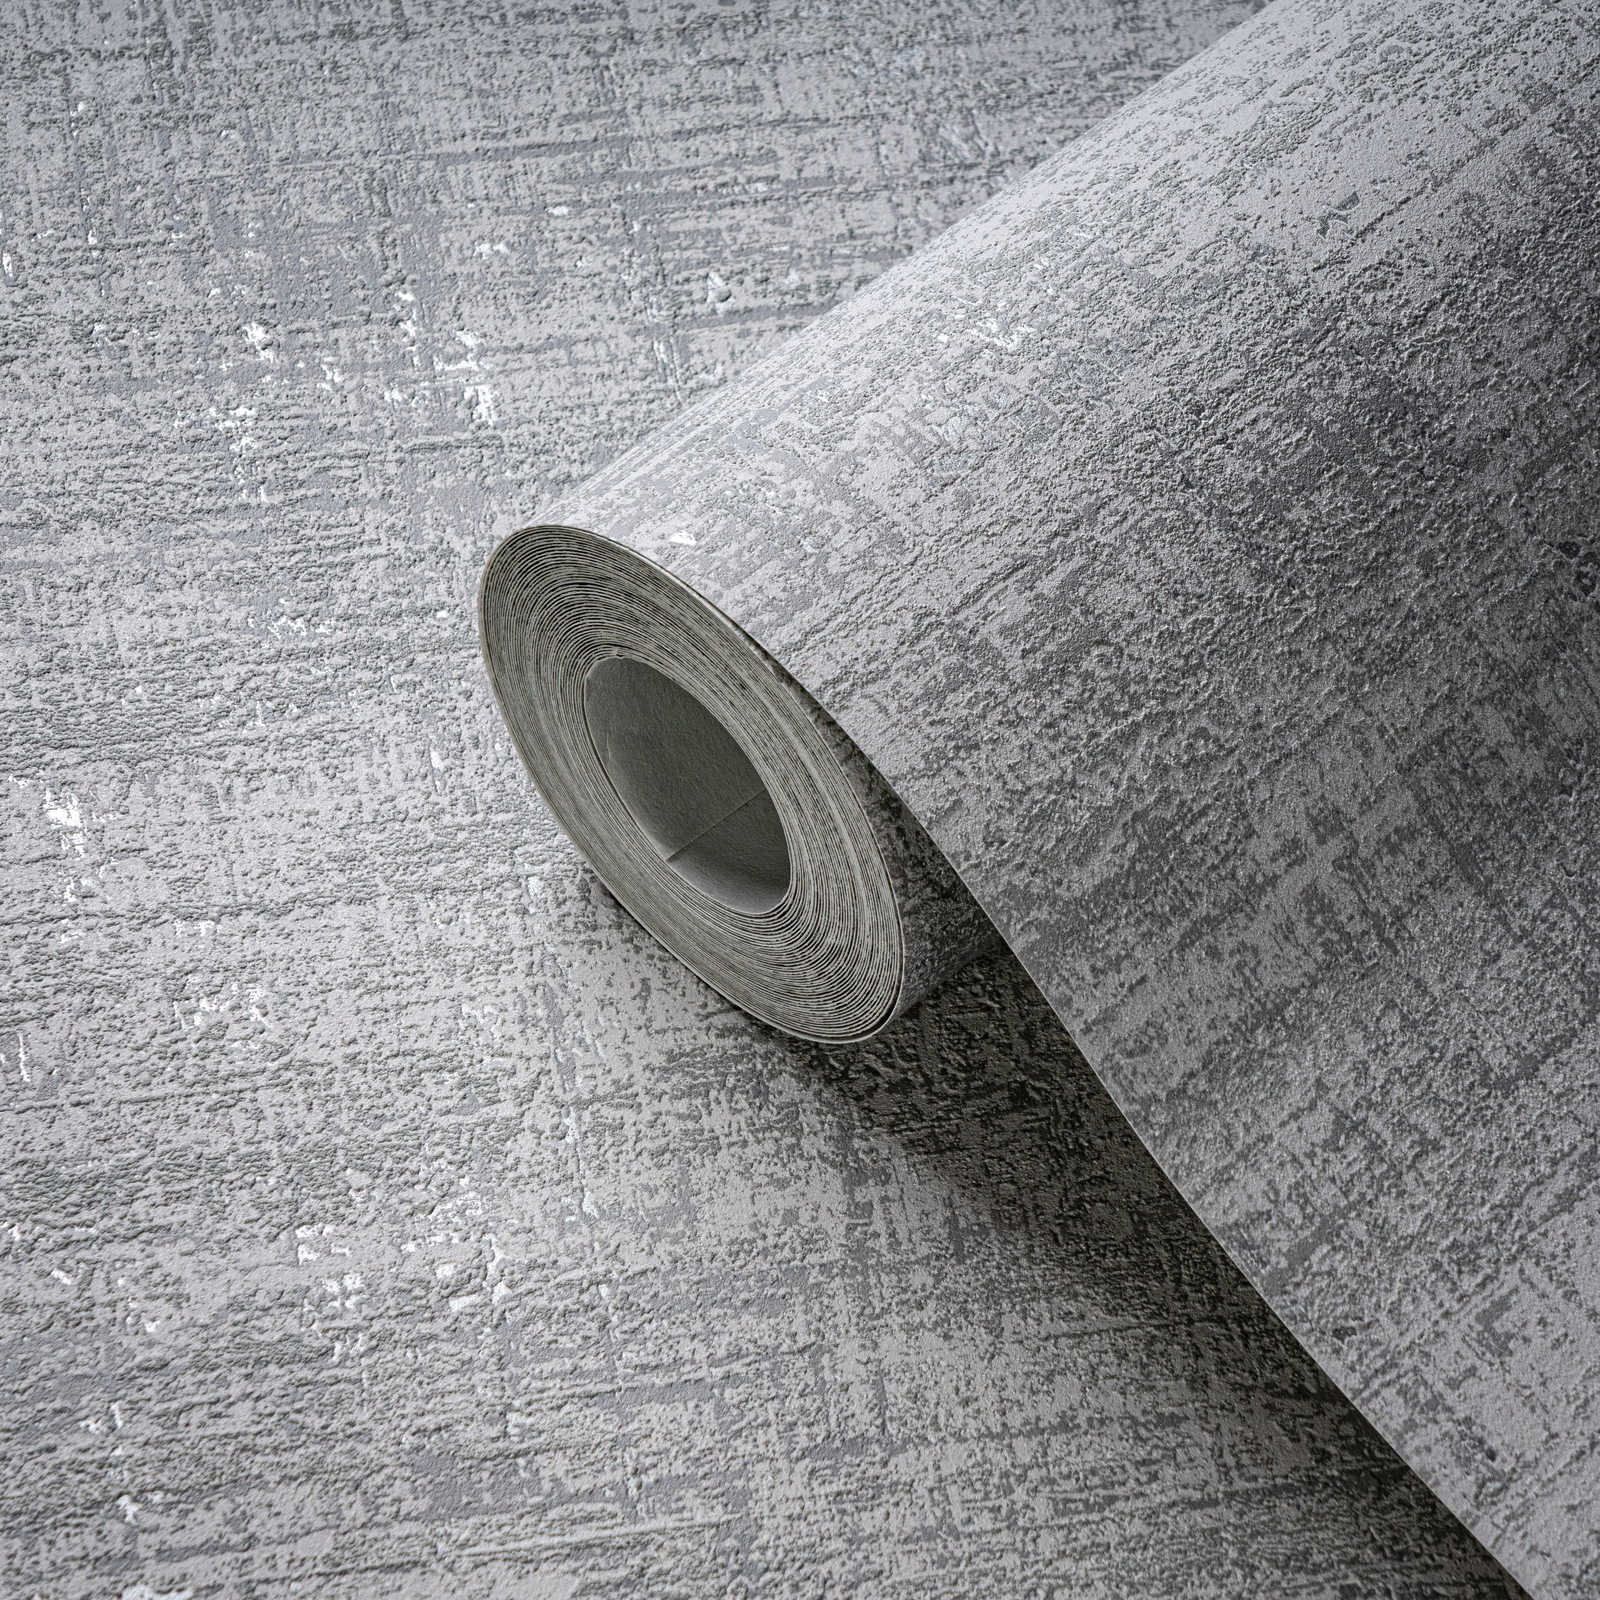             Non-woven wallpaper with metallic accents - grey, silver
        